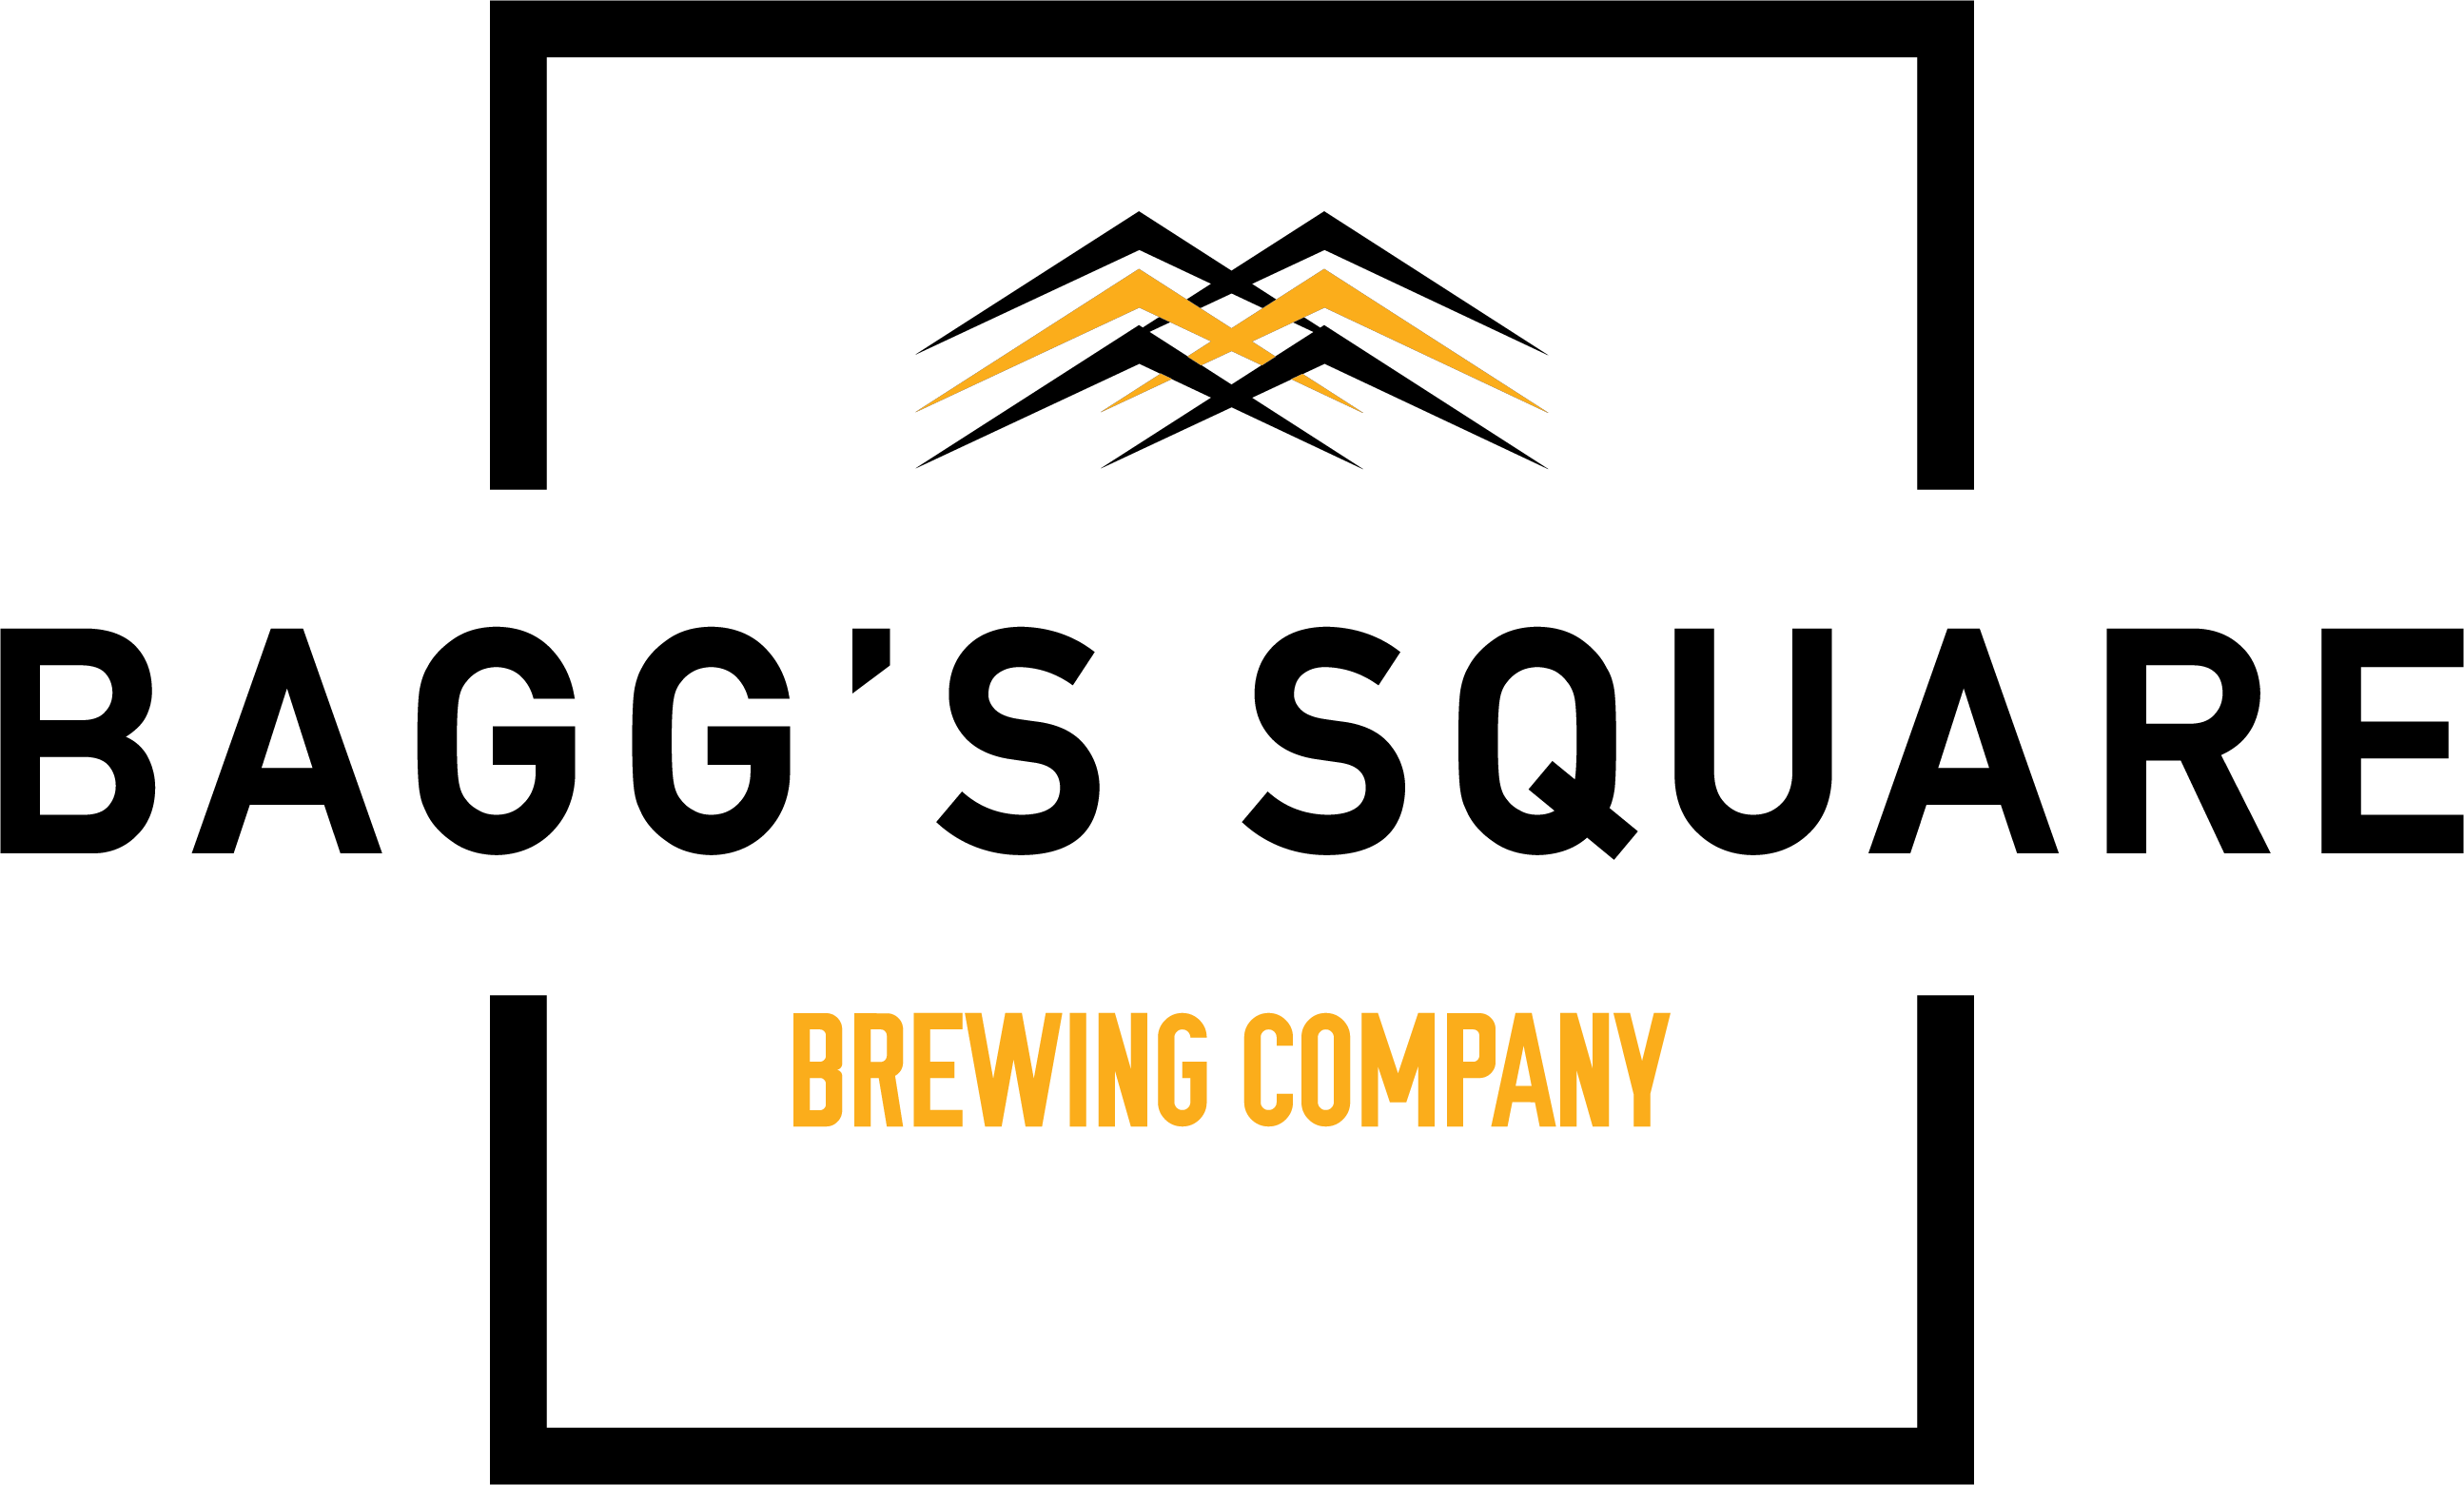 Bagg’s Square Brewing Company Logo